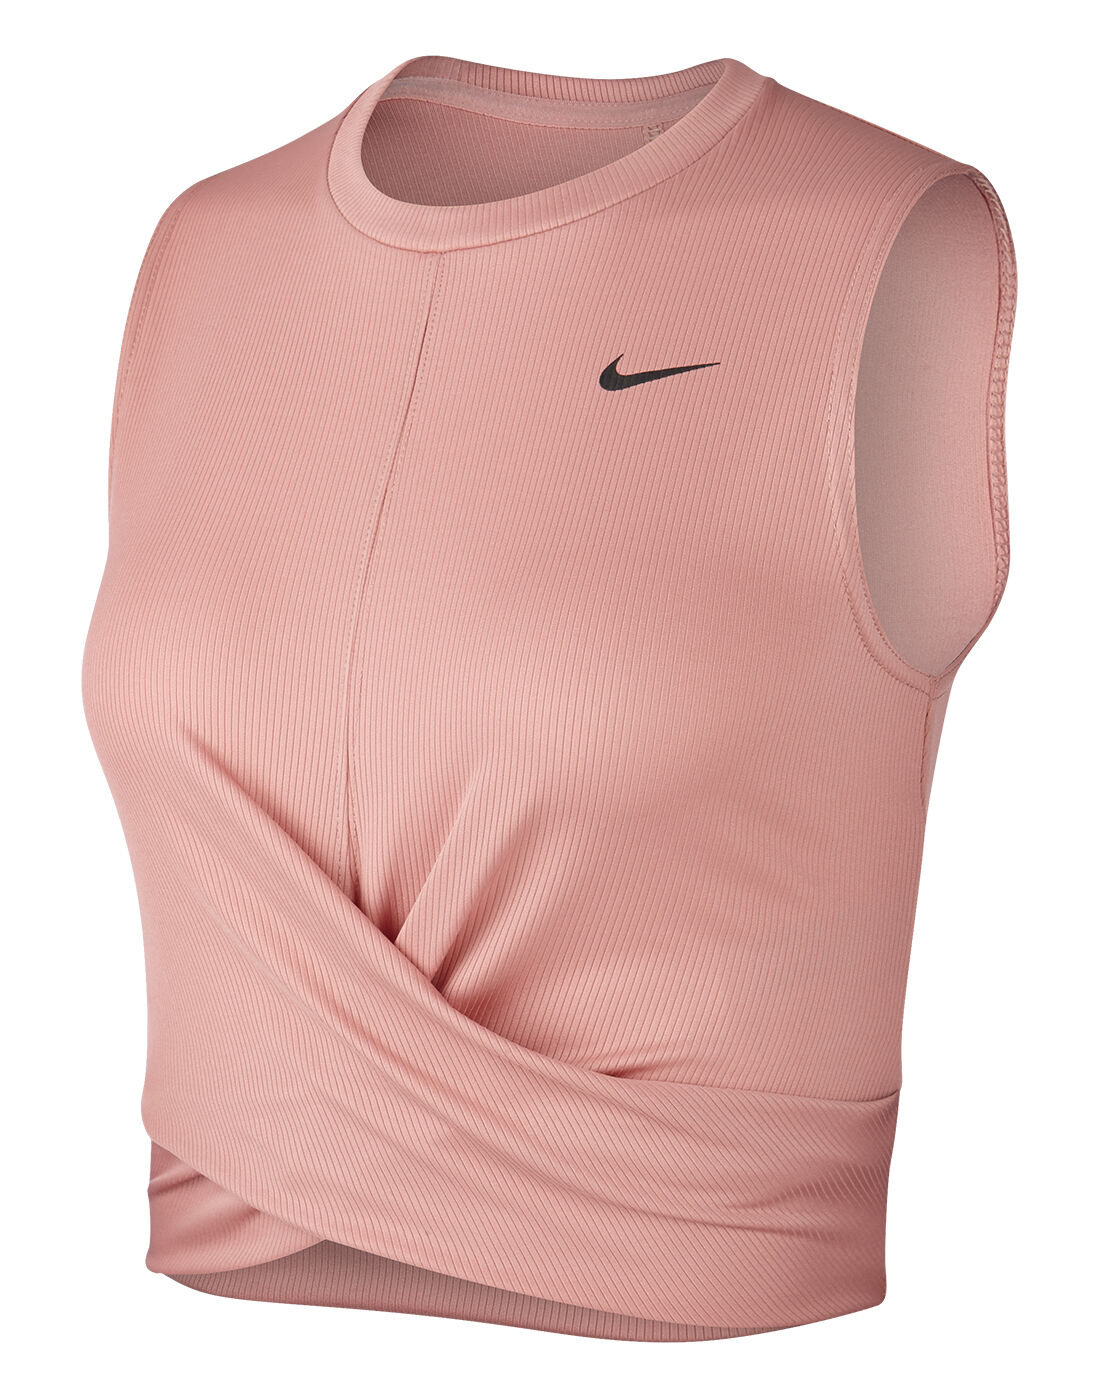 Women's Pink Nike Twisted Tank Top 